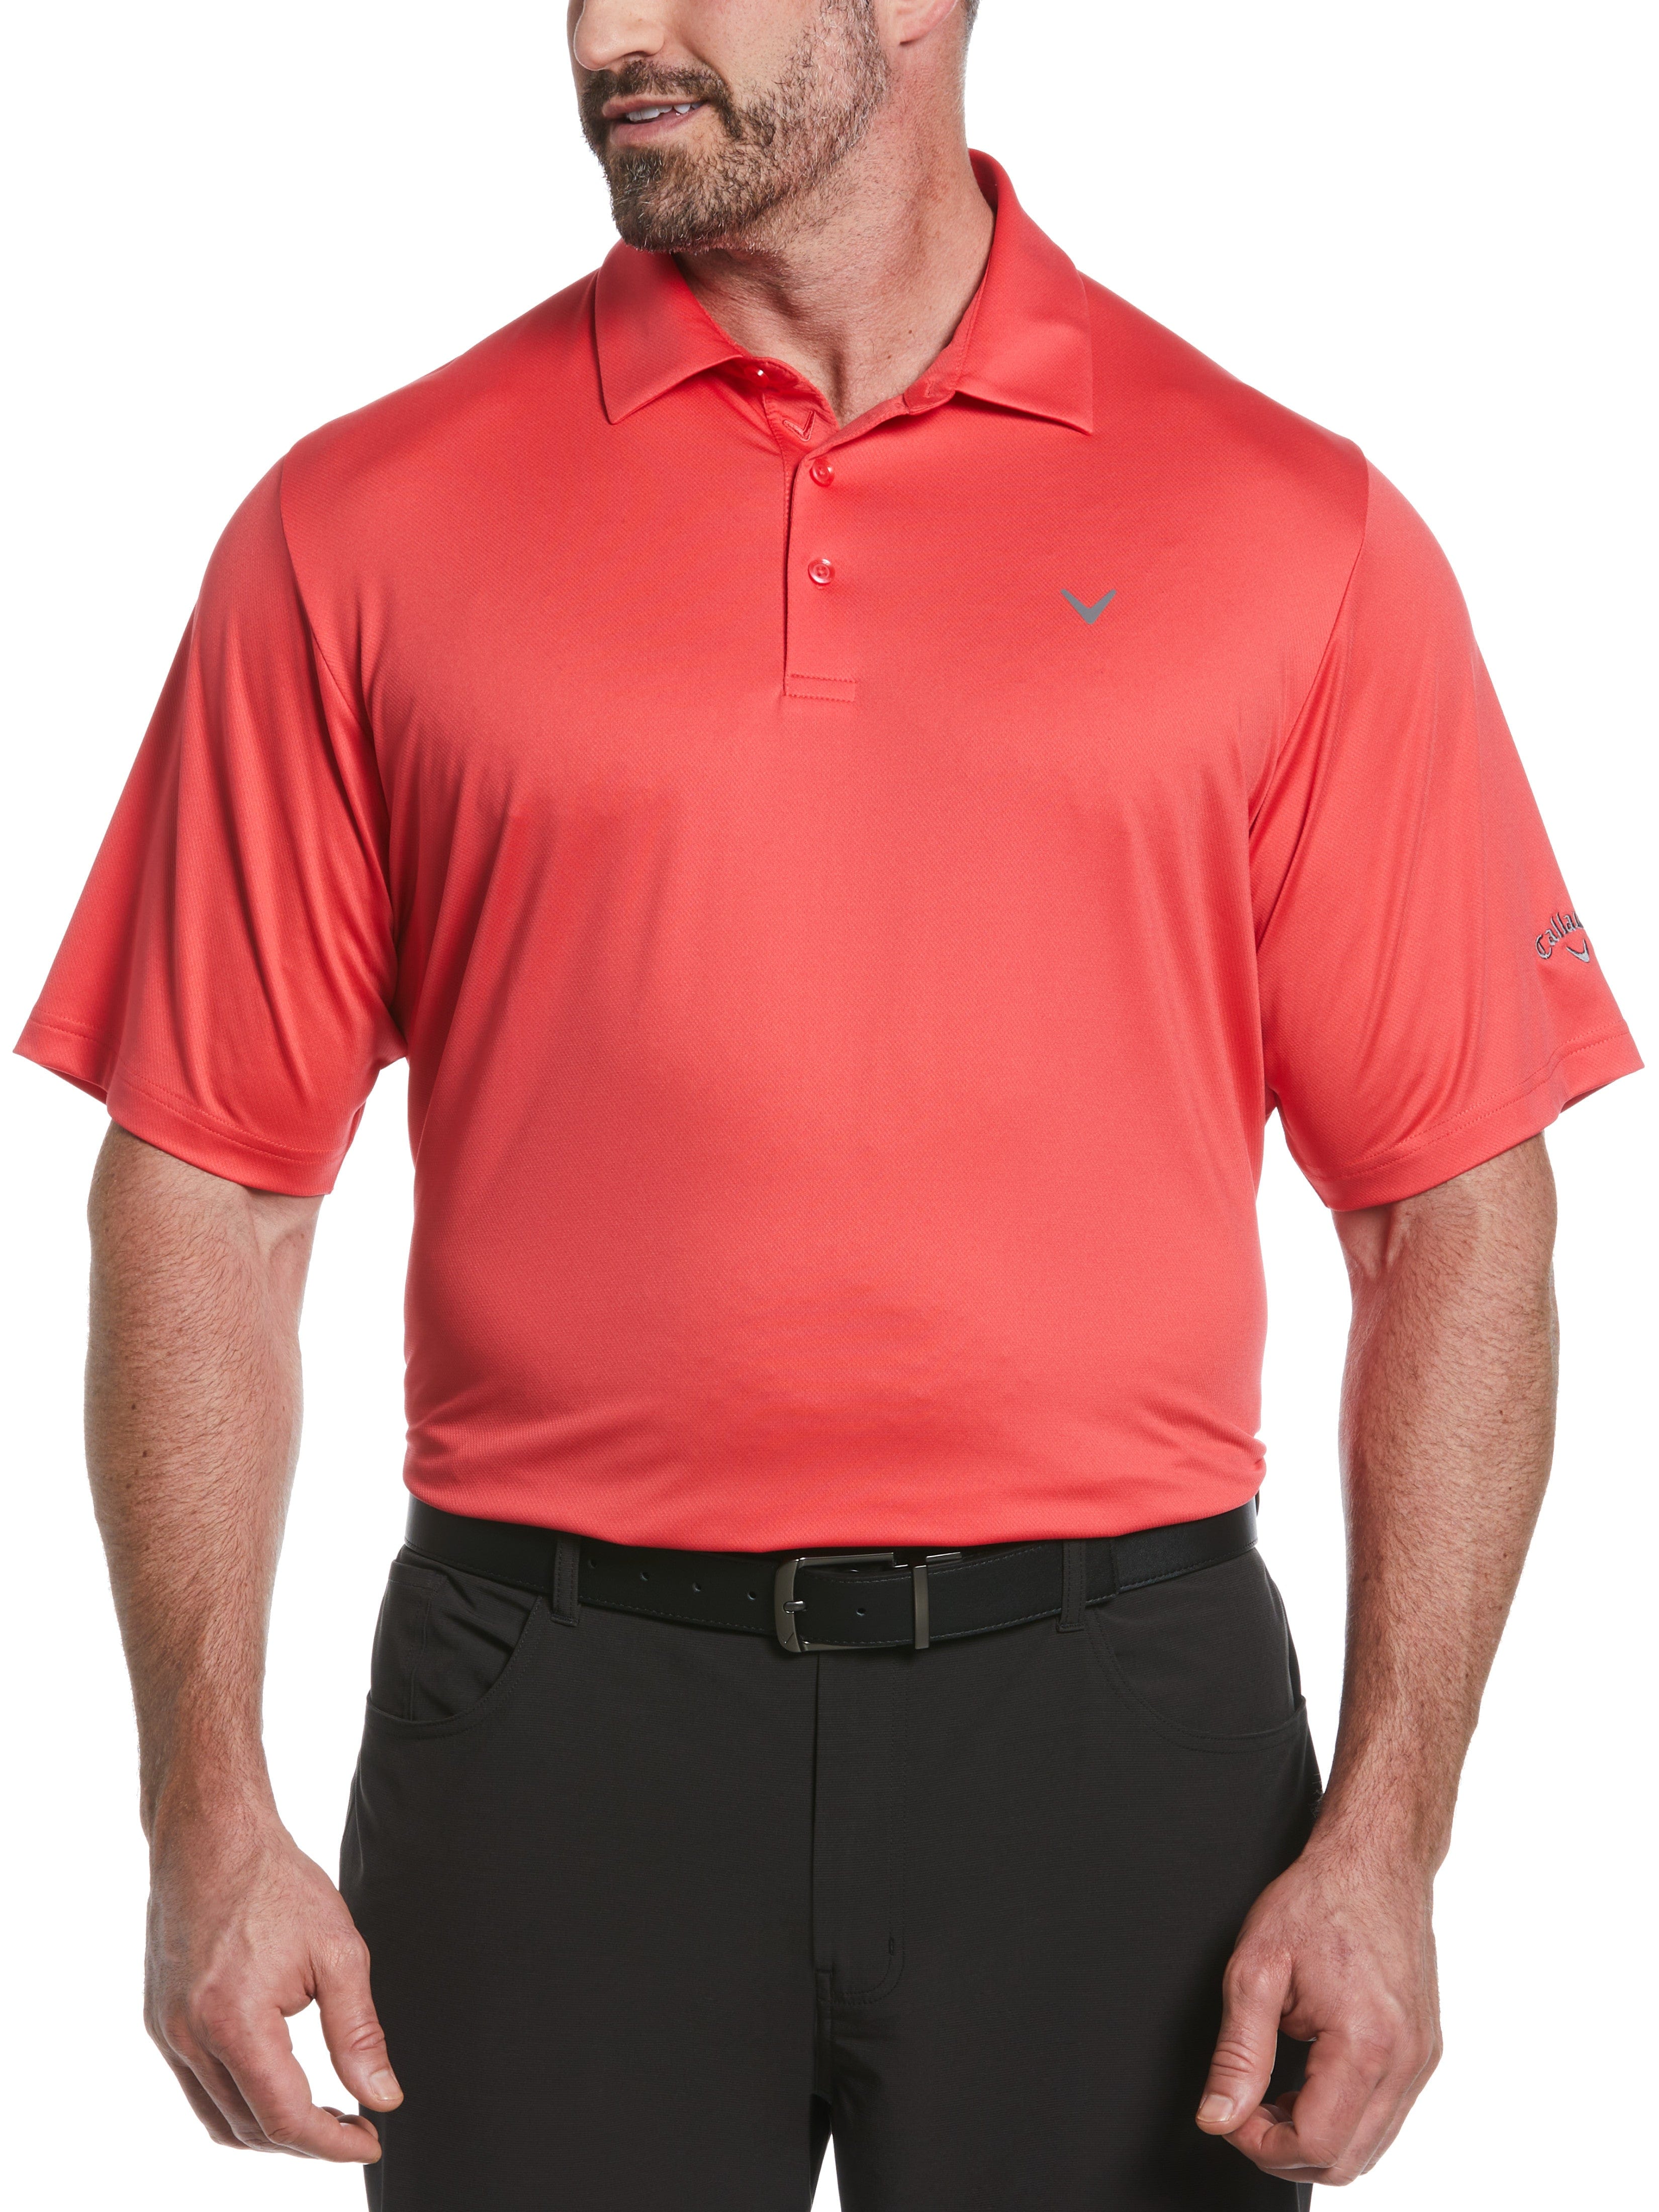 Callaway Apparel Mens Big & Tall Solid Swing Tech Golf Polo Shirt, Size 1X, Teaberry Pink, Polyester/Elastane | Golf Apparel Shop